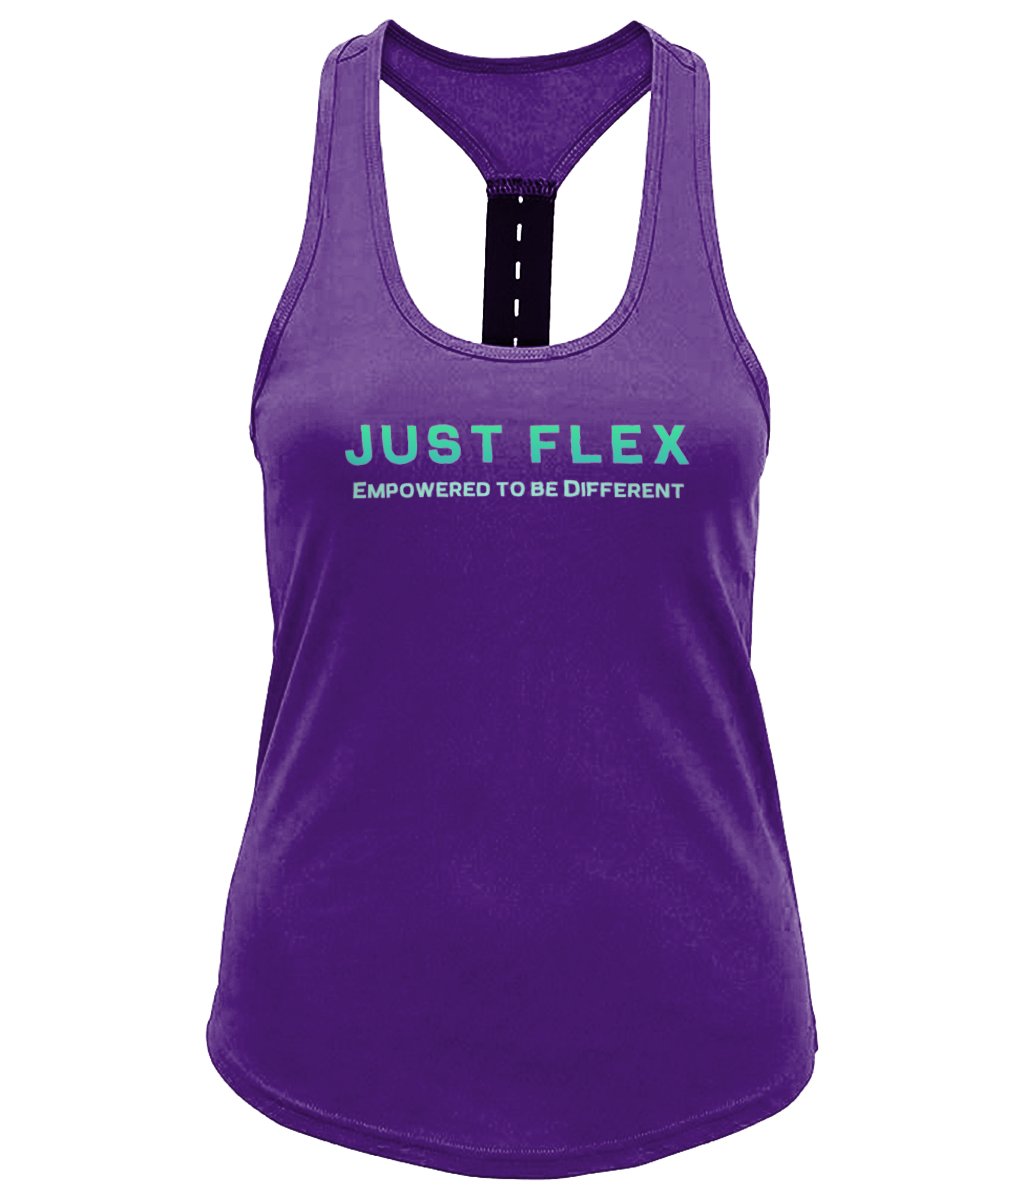 Just Flex - Empowered To Be Different Women's TriDri® Performance Strap Back Vest